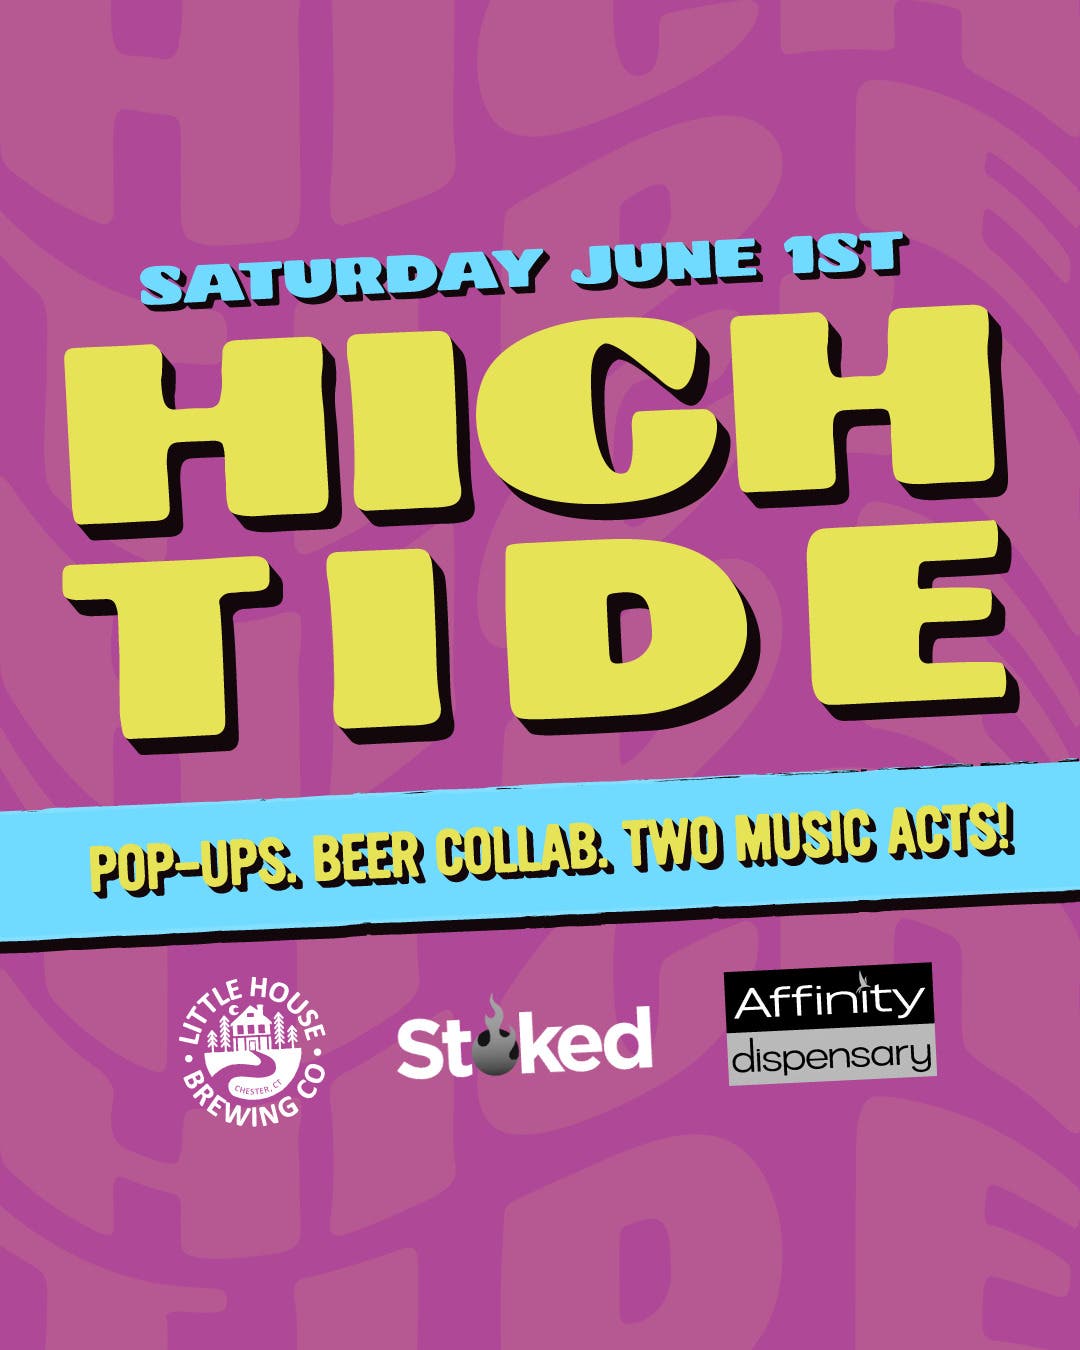 High Tide at Tribus Beer Co. Live music, beer collab, pop-ups!